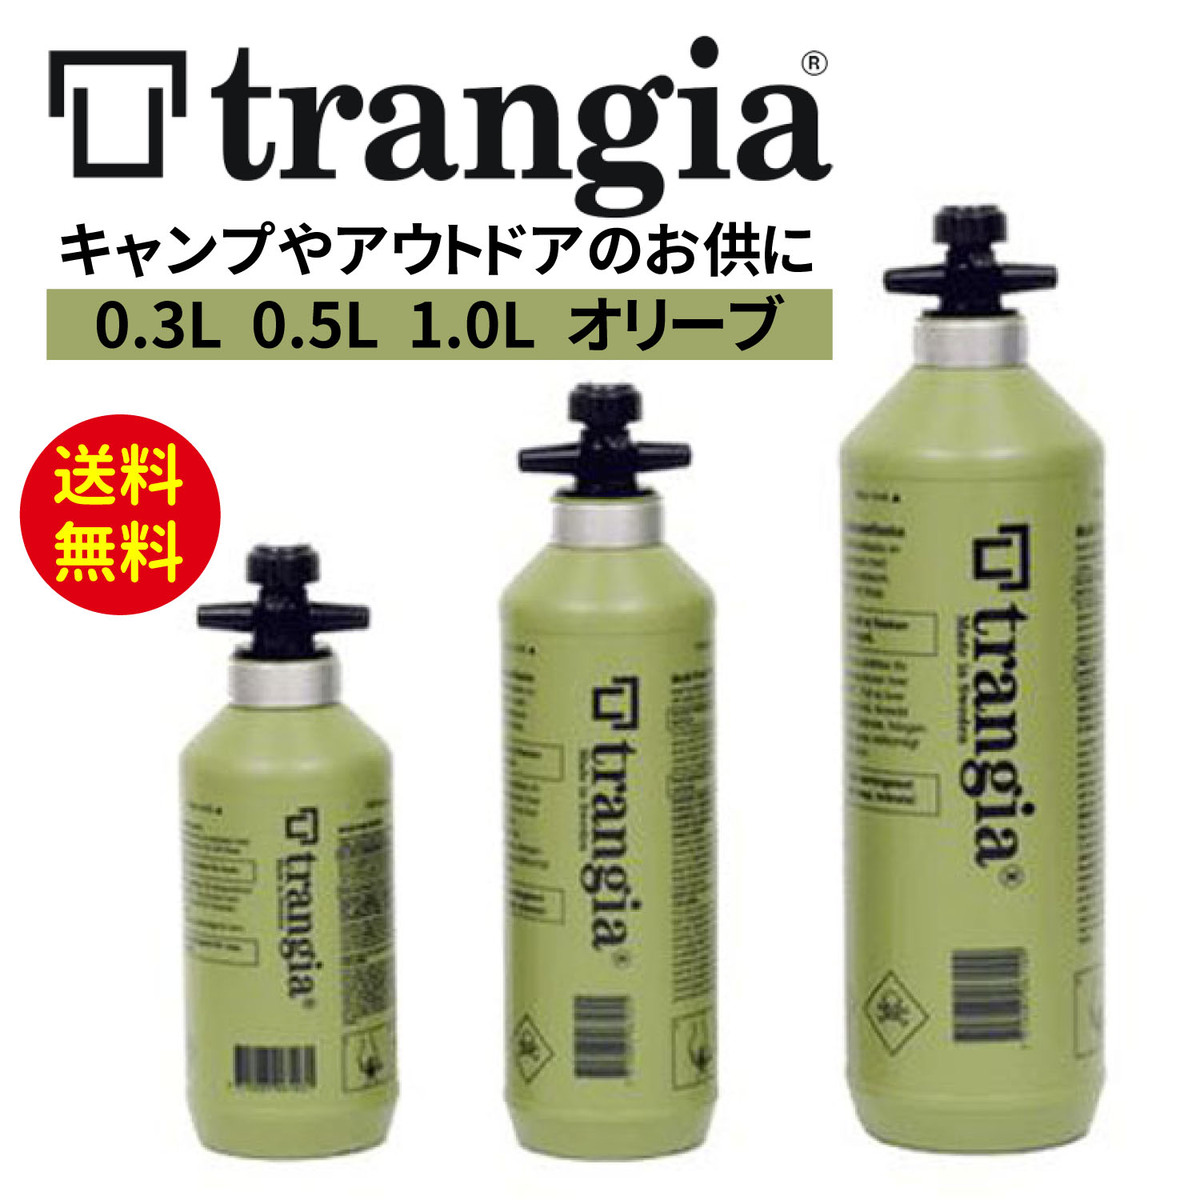 Trangia トランギア フューエルボトル j 0.5L